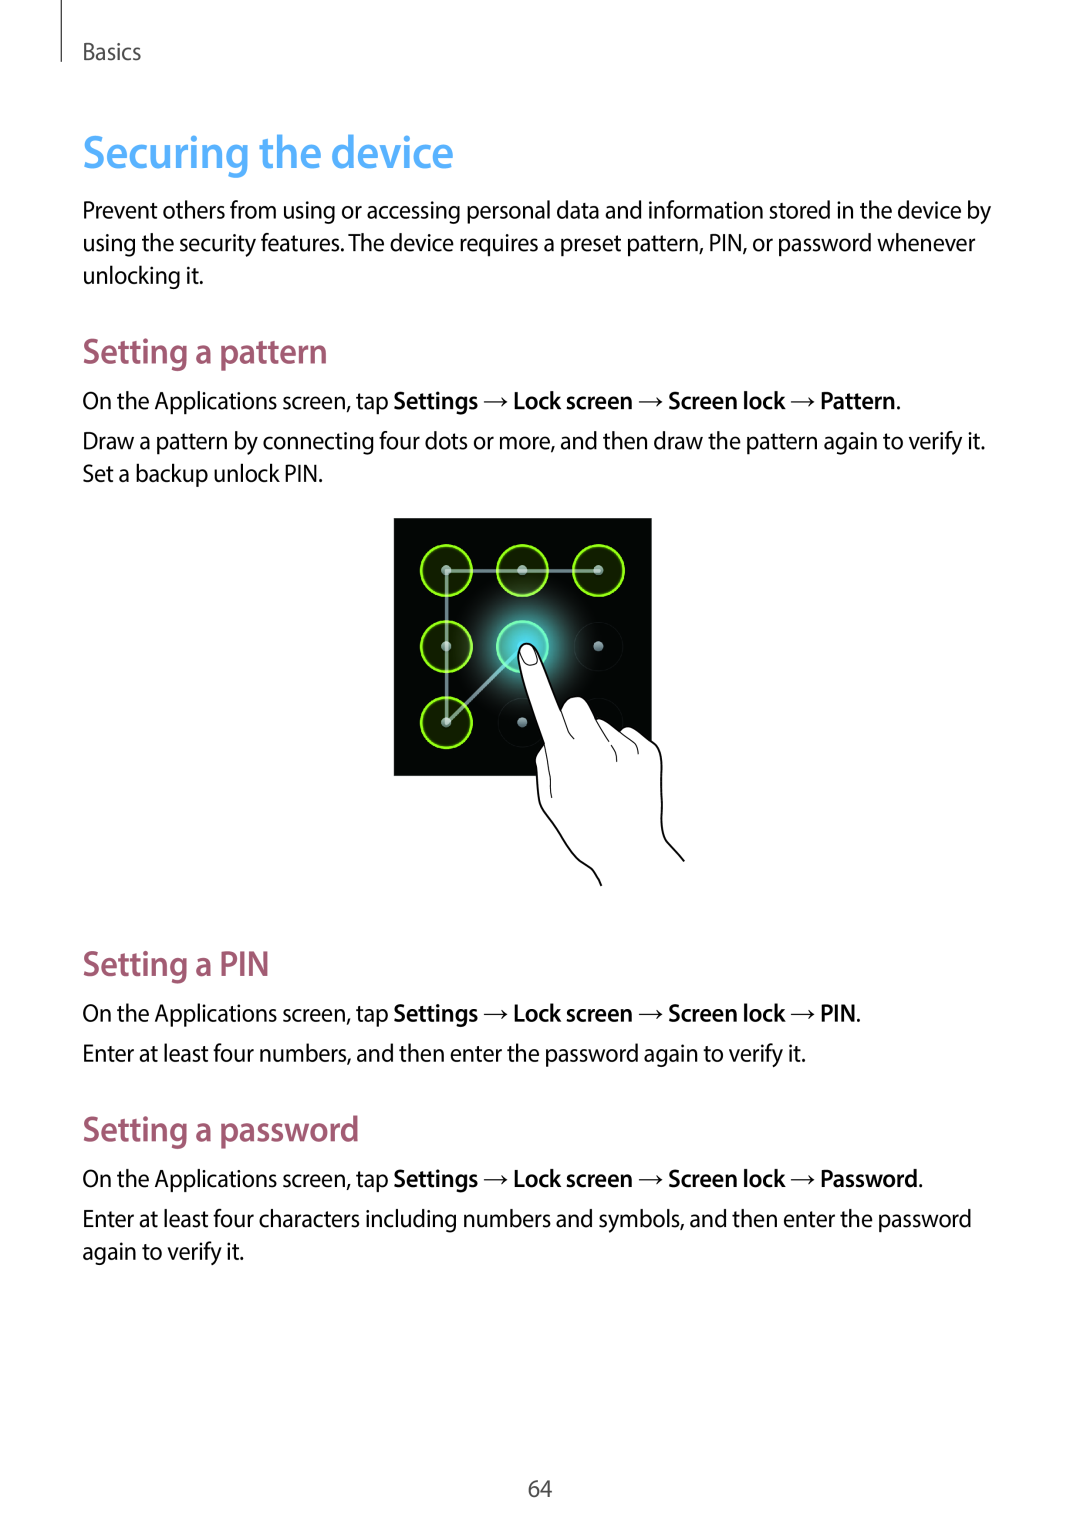 Samsung EK-GC100 user manual Securing the device, Setting a pattern, Setting a PIN, Setting a password, Basics 